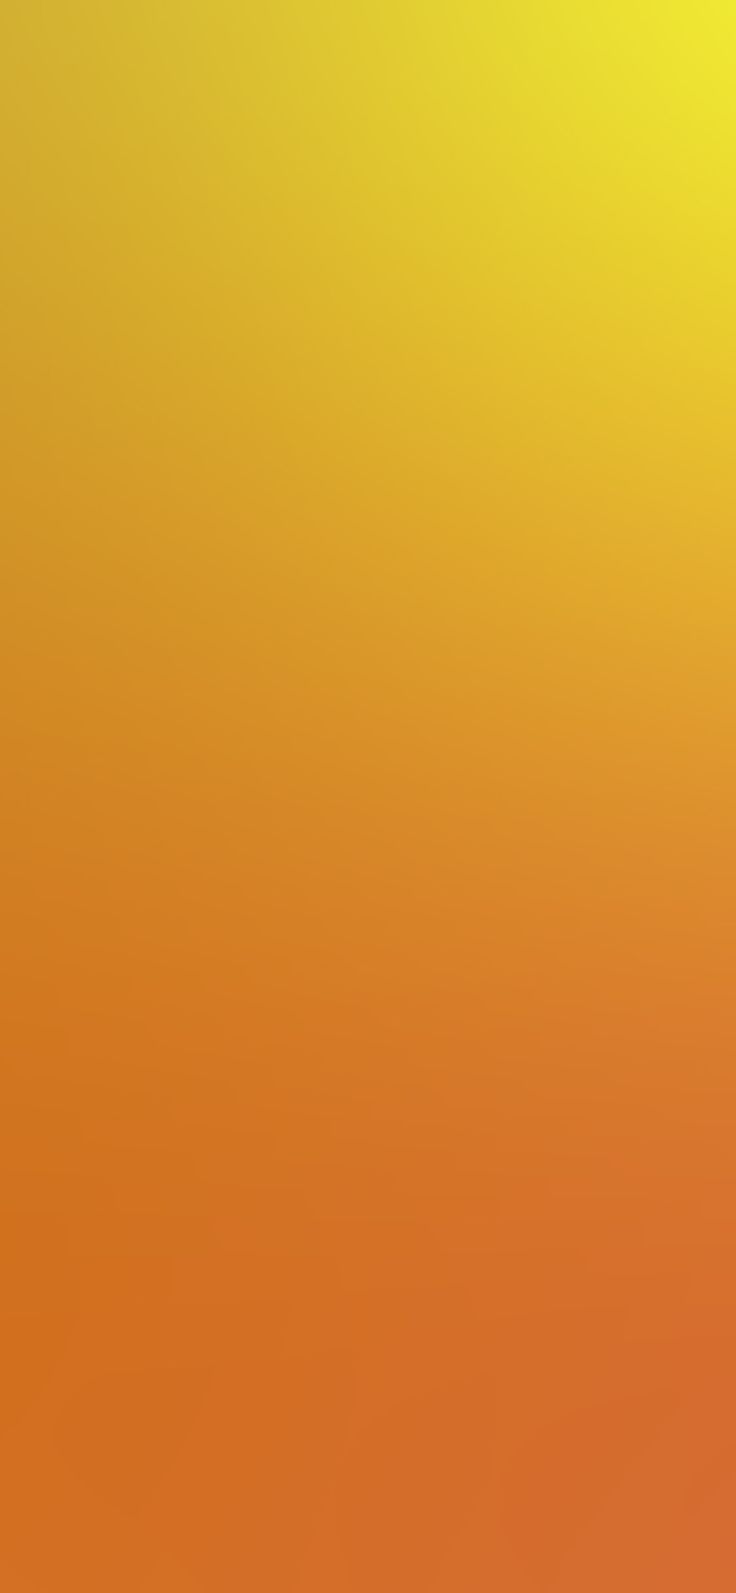 iPhone X wallpaper, orange yellow blur gradation